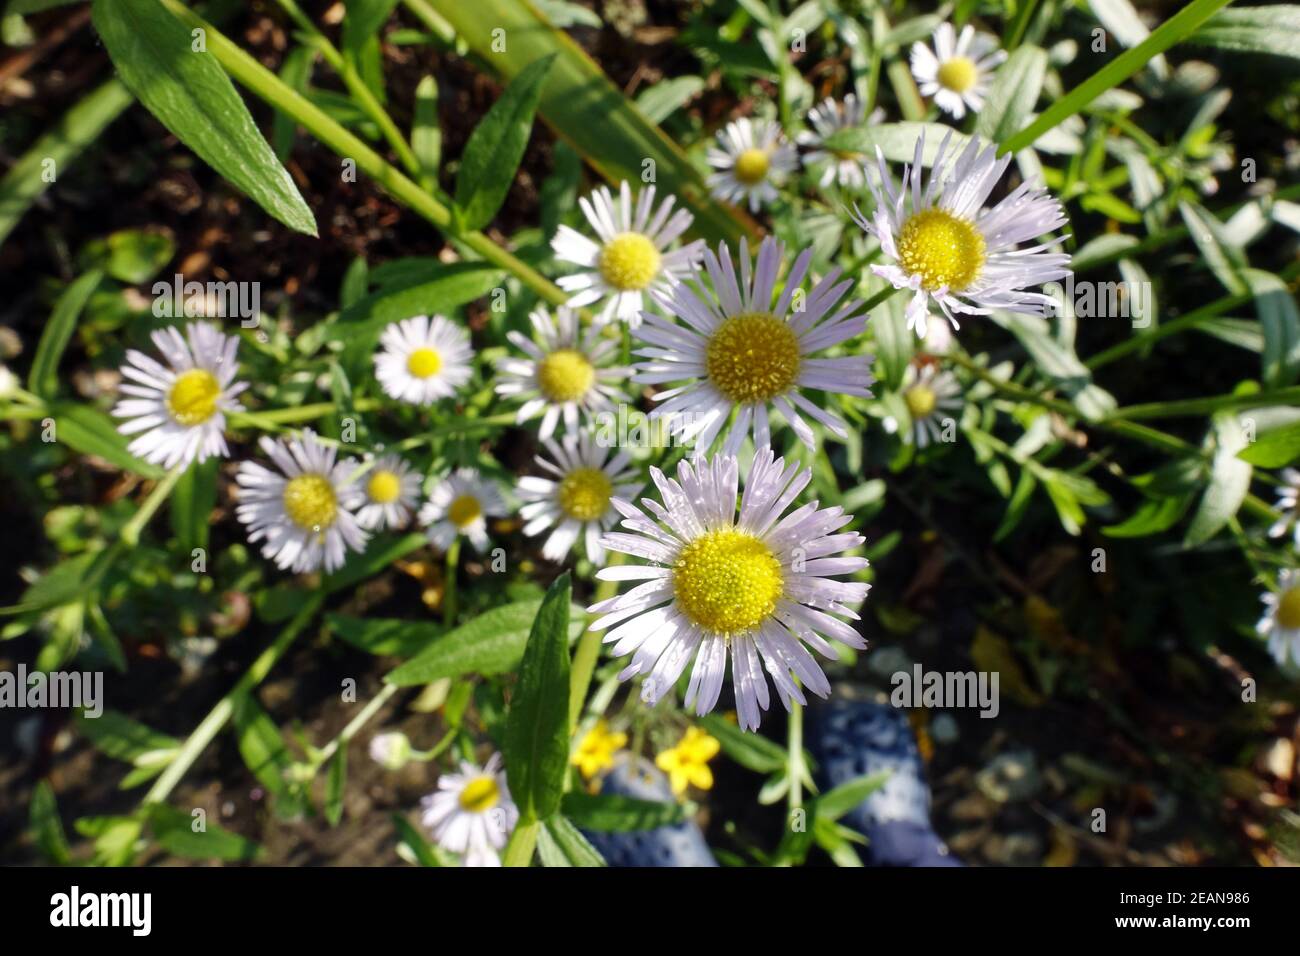 annual fleabane, daisy fleabane, or eastern daisy fleabane (Erigeron annuus),  - dew drops on the flowers Stock Photo